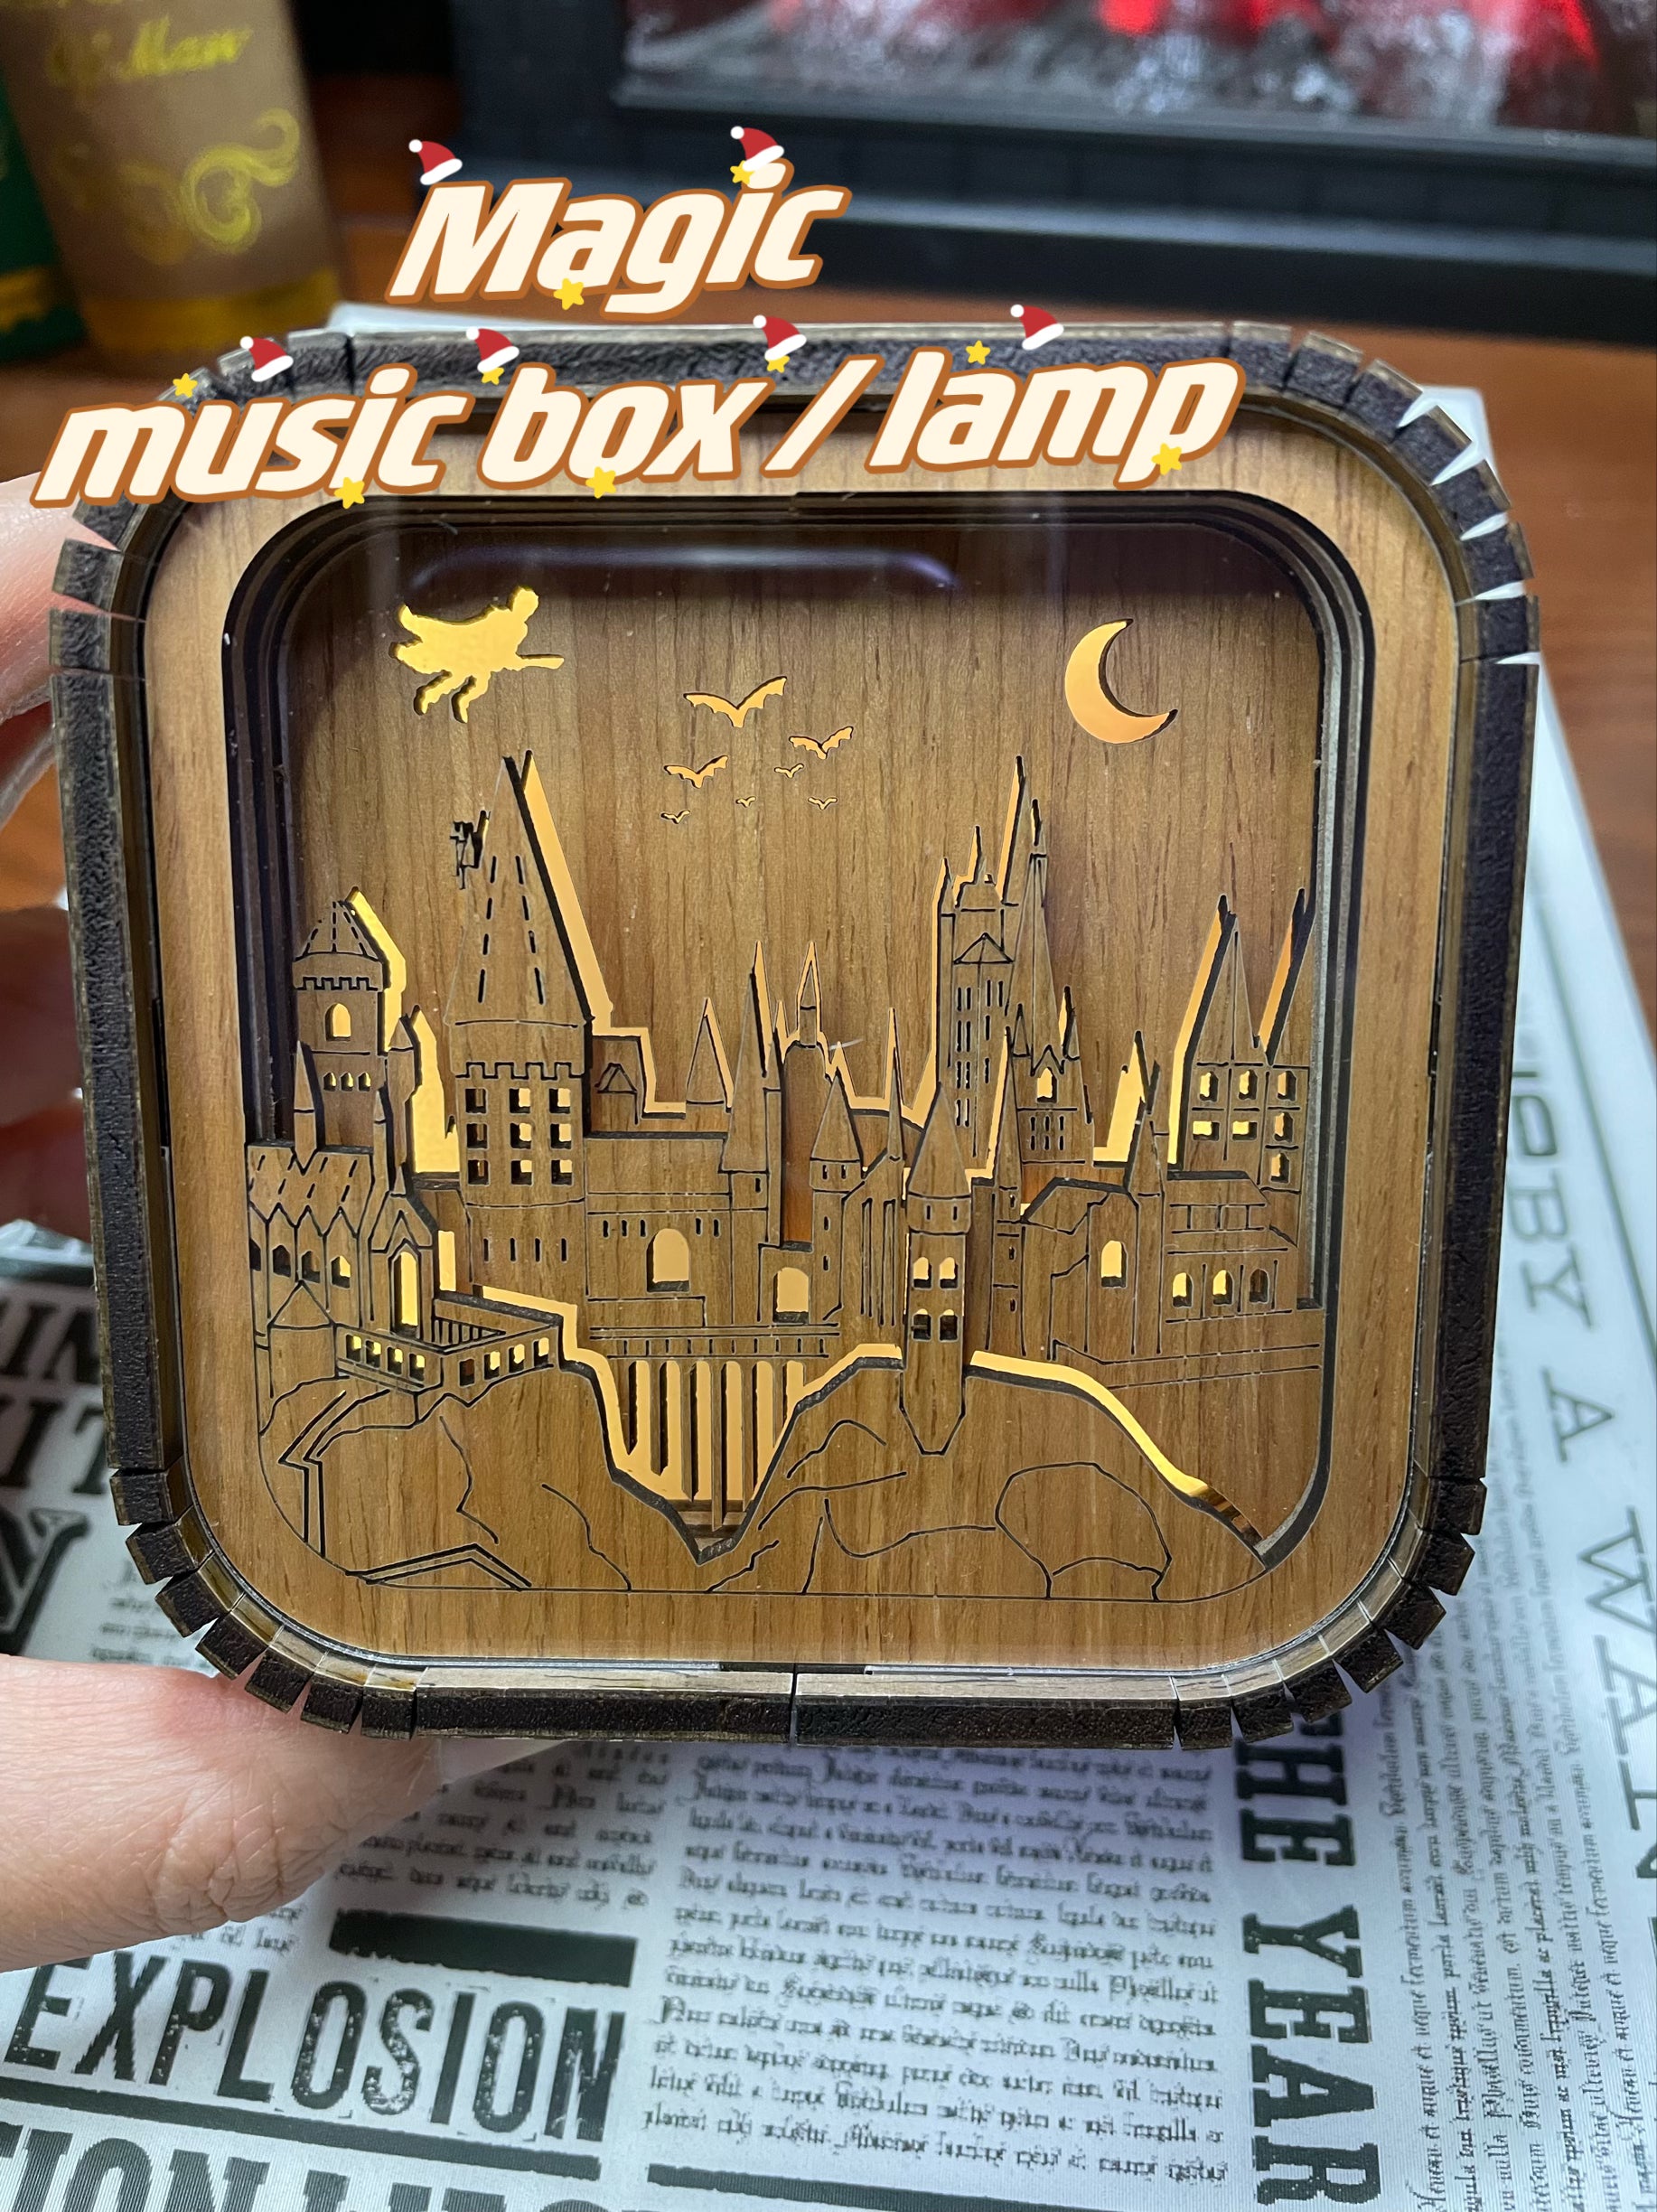 Magic music box&lamp